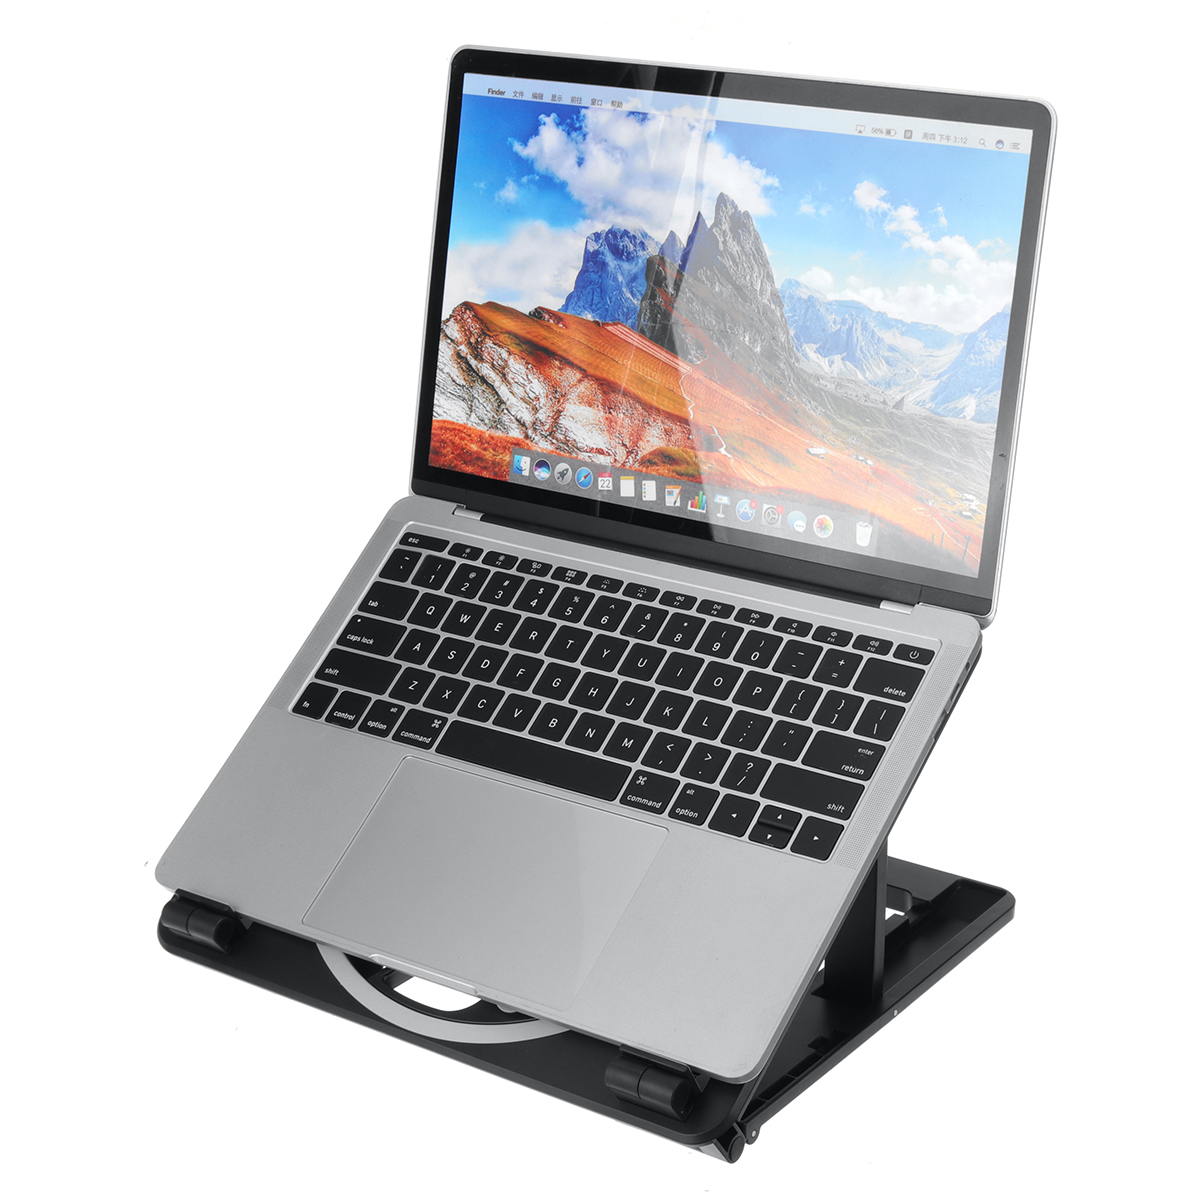 Multifunctional-Folding-with-Double-Cooling-Fan-Laptop-Tablet-Mobile-Phone-Macbook-Desktop-Holder-St-1875641-8